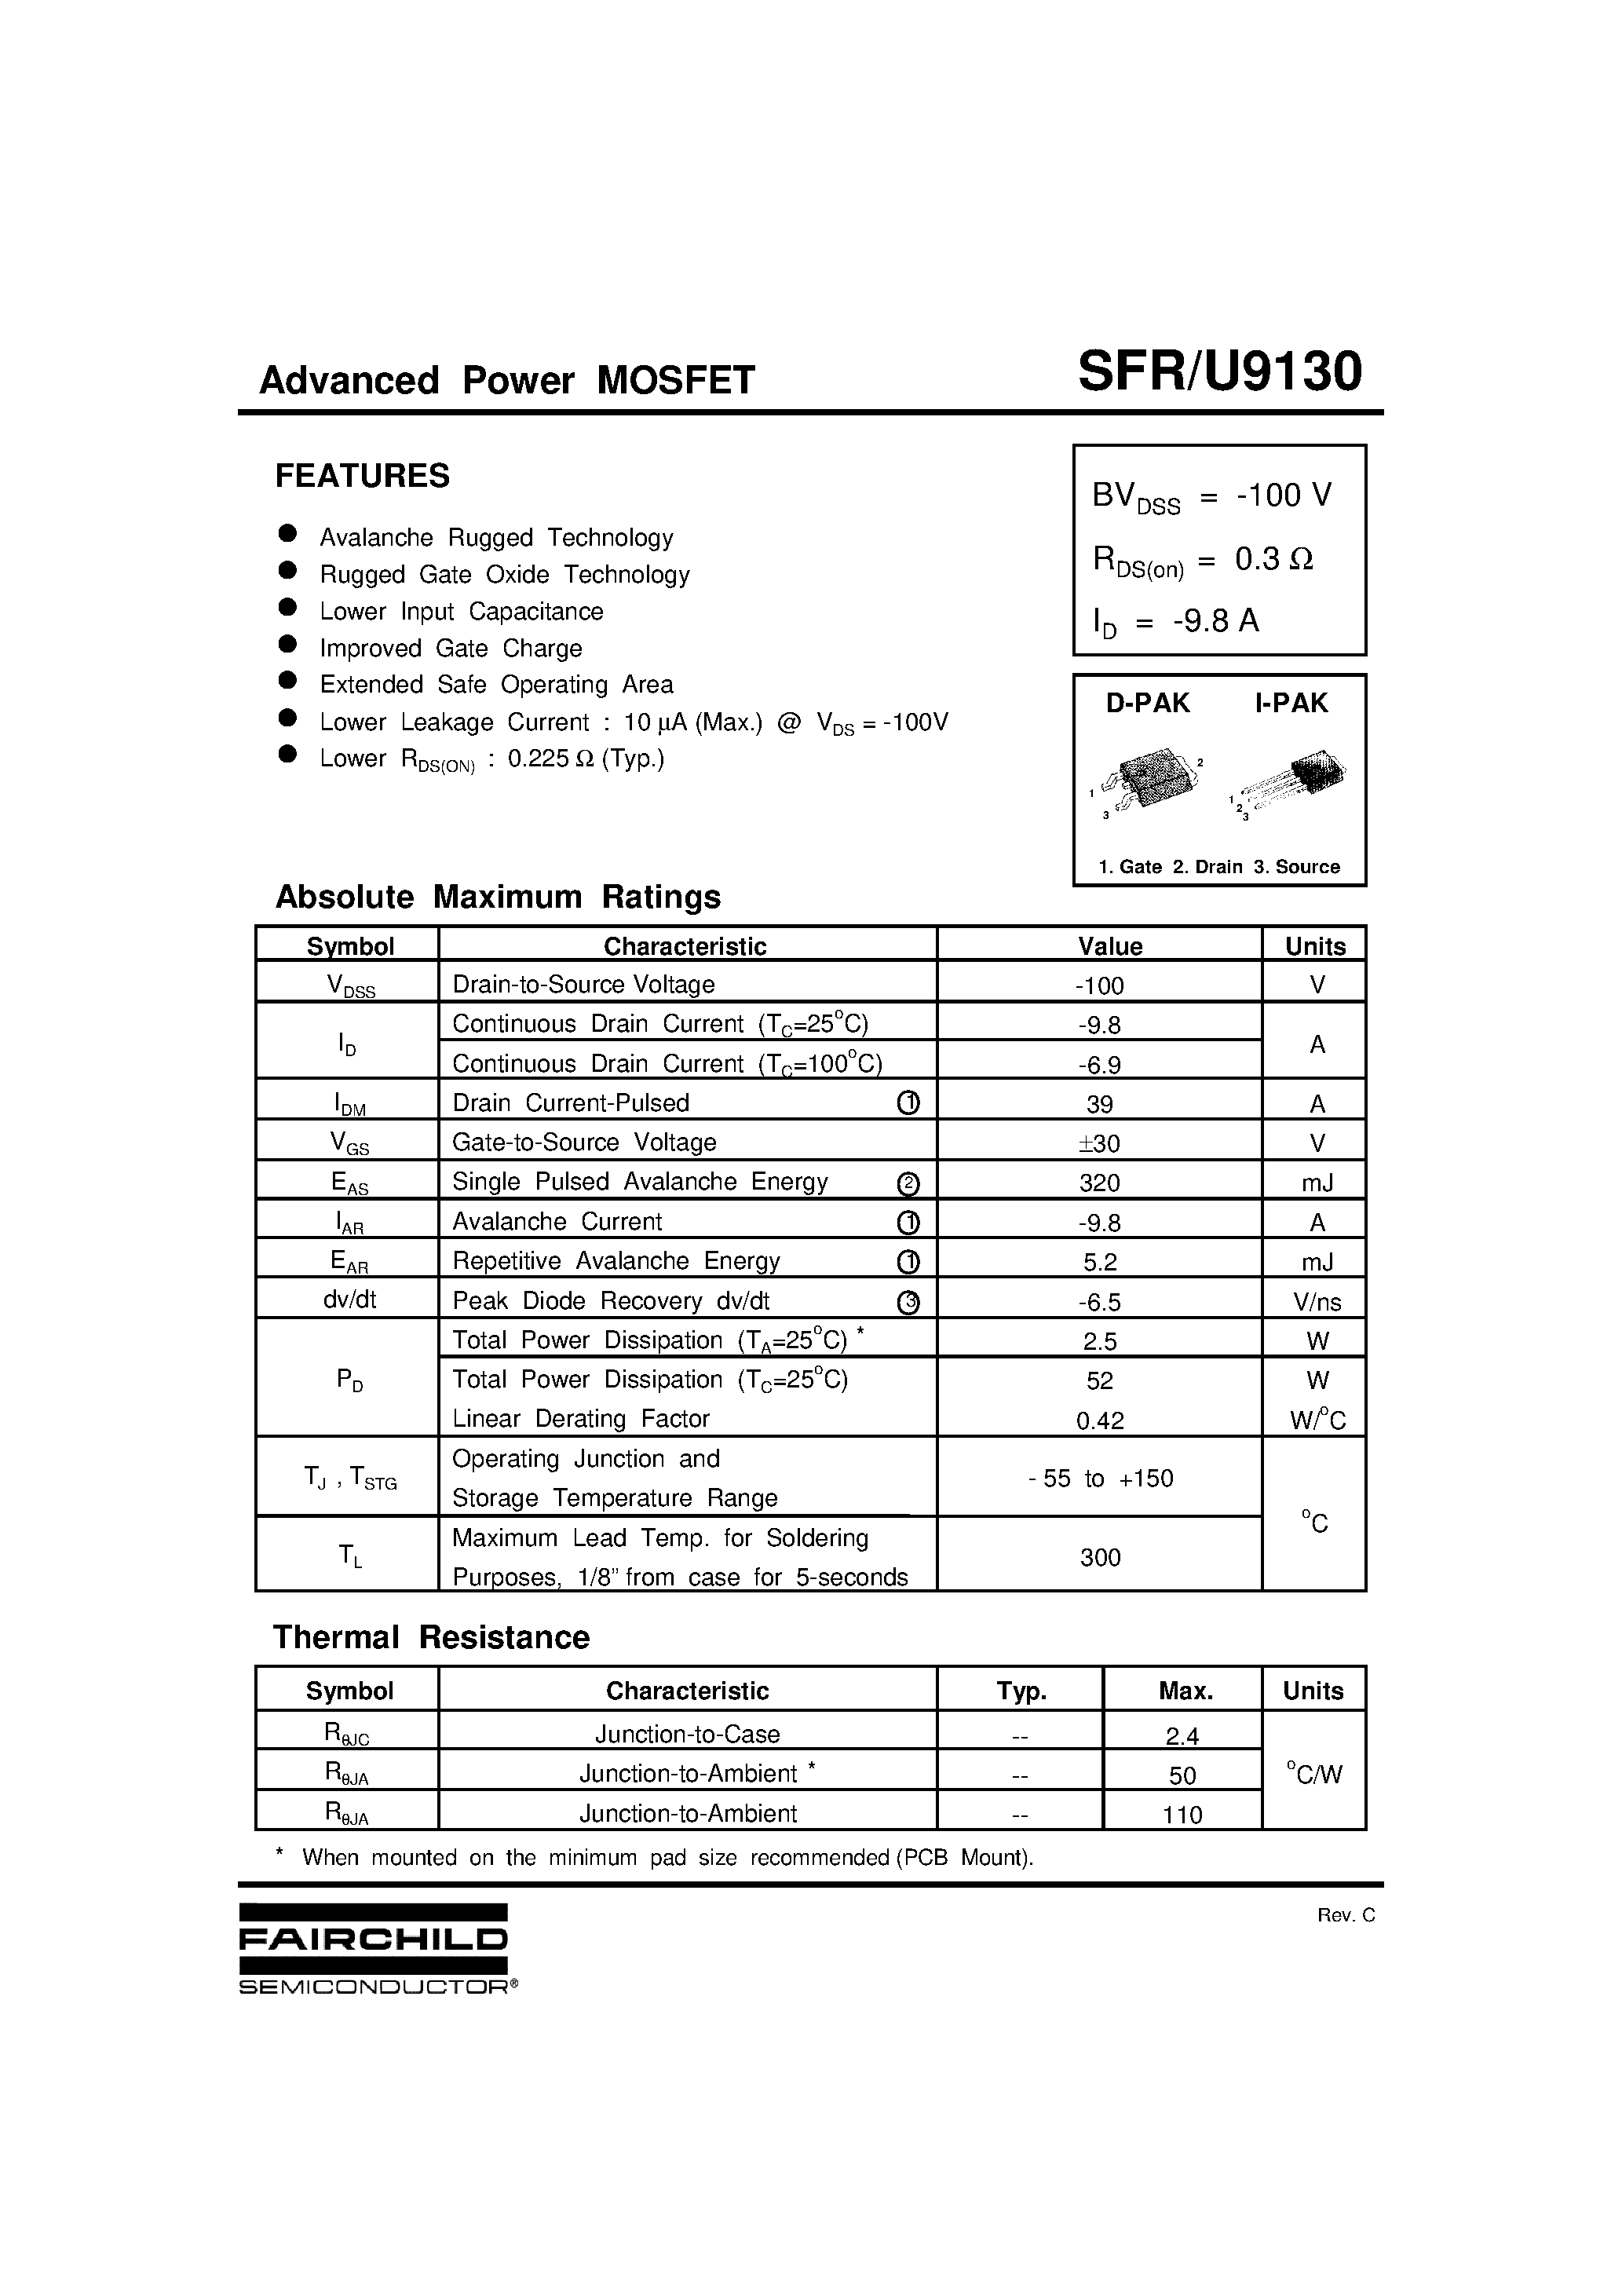 Datasheet SFRU9130 - Advanced Power MOSFET page 1